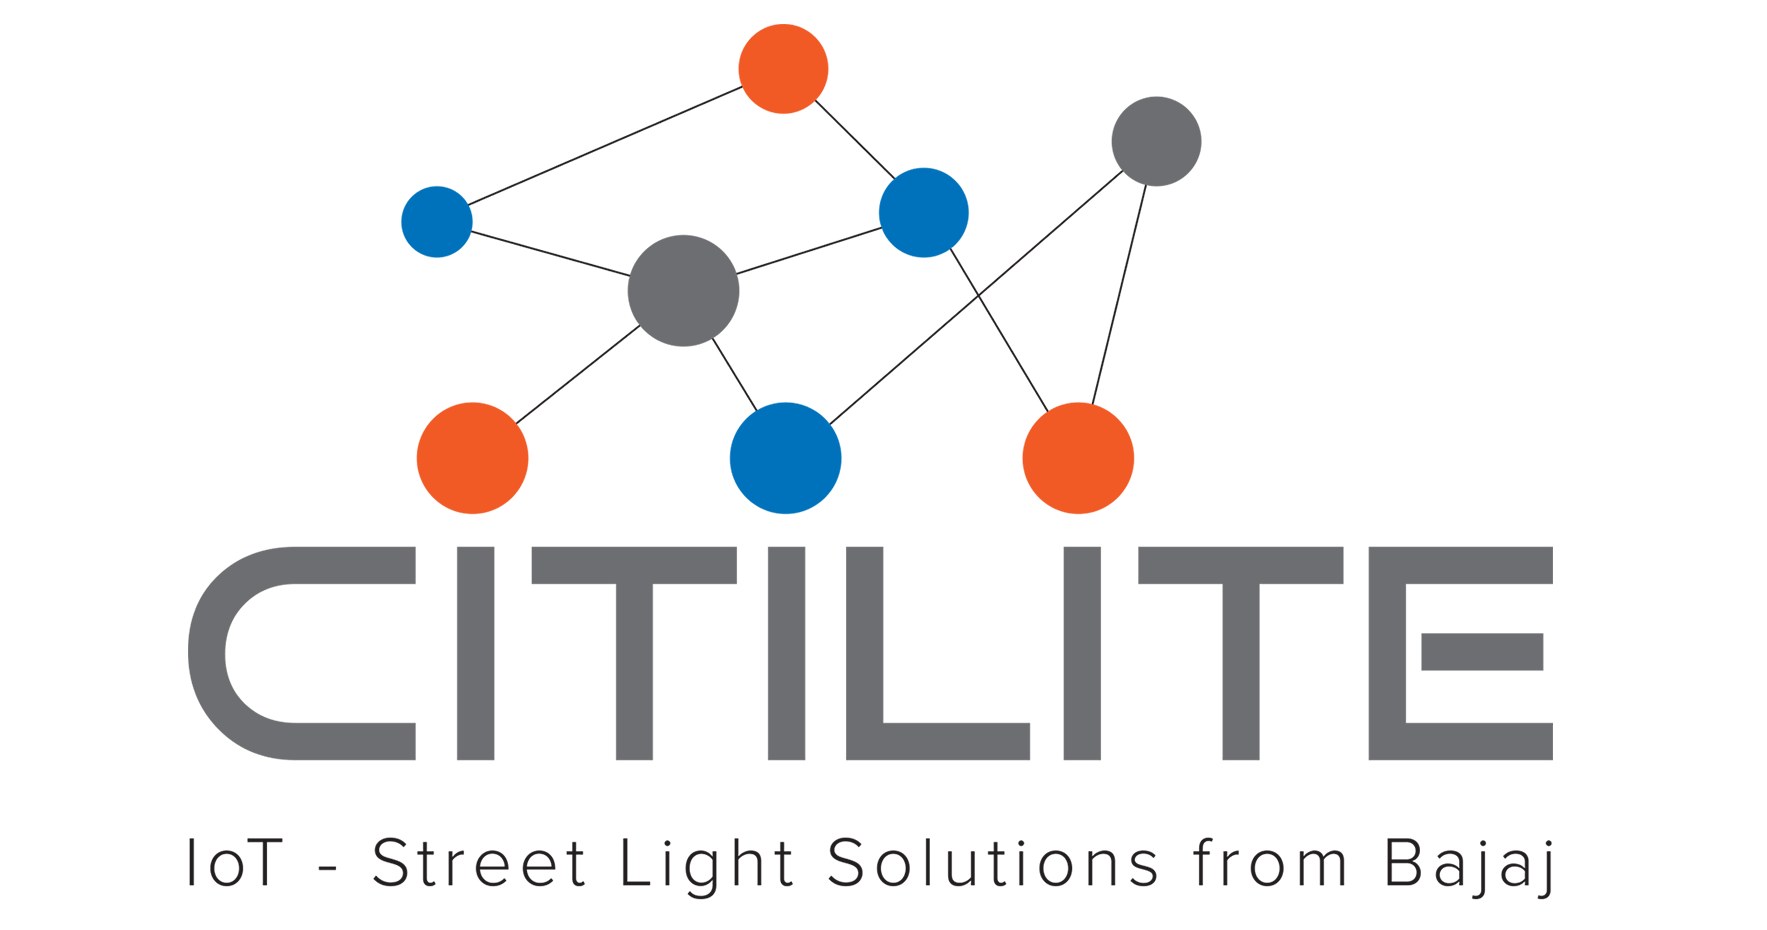 Citilite - Street Light Solutions